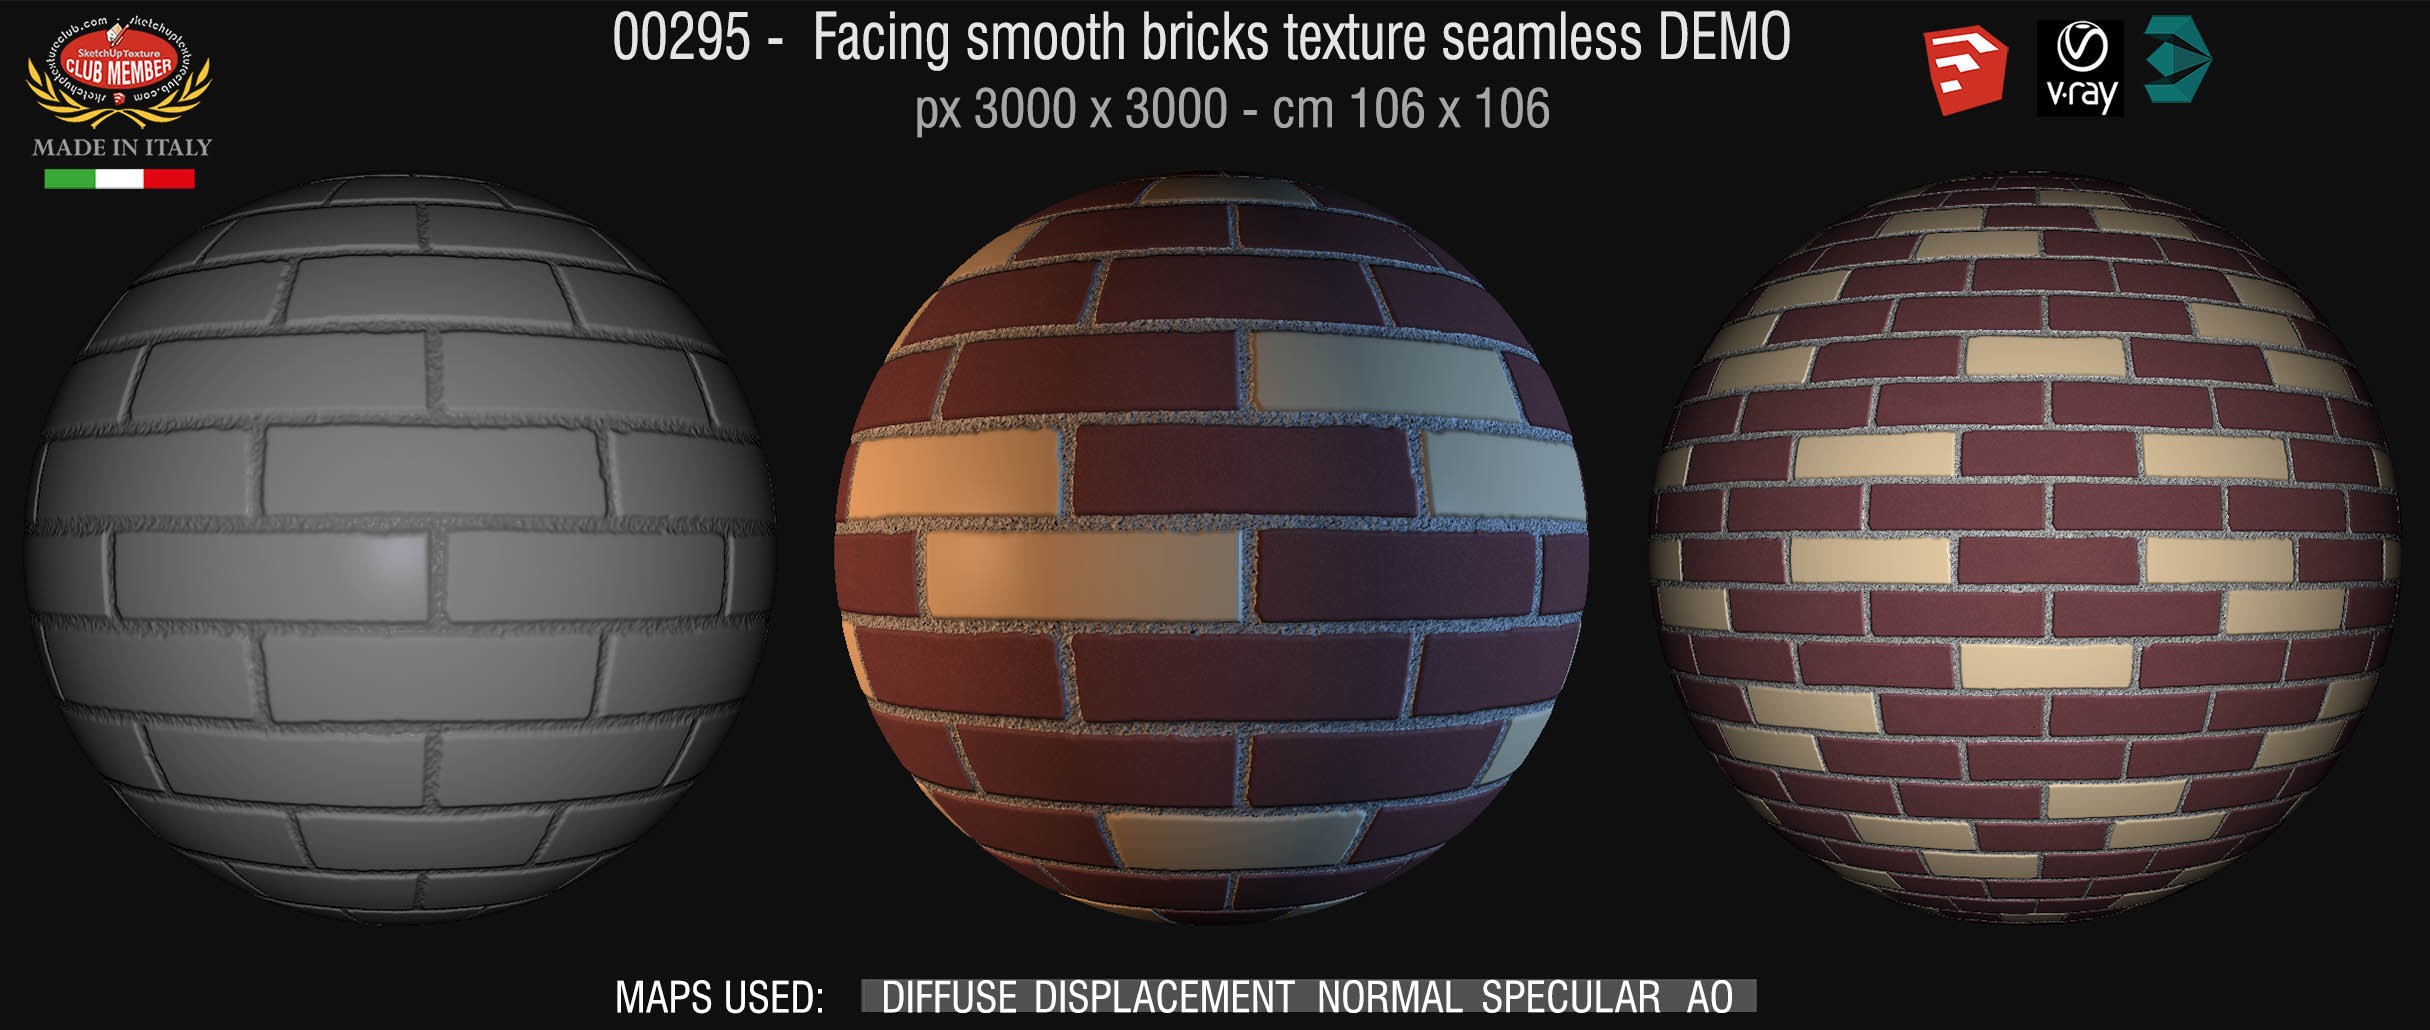 00295 Facing smooth bricks texture seamless + maps DEMO